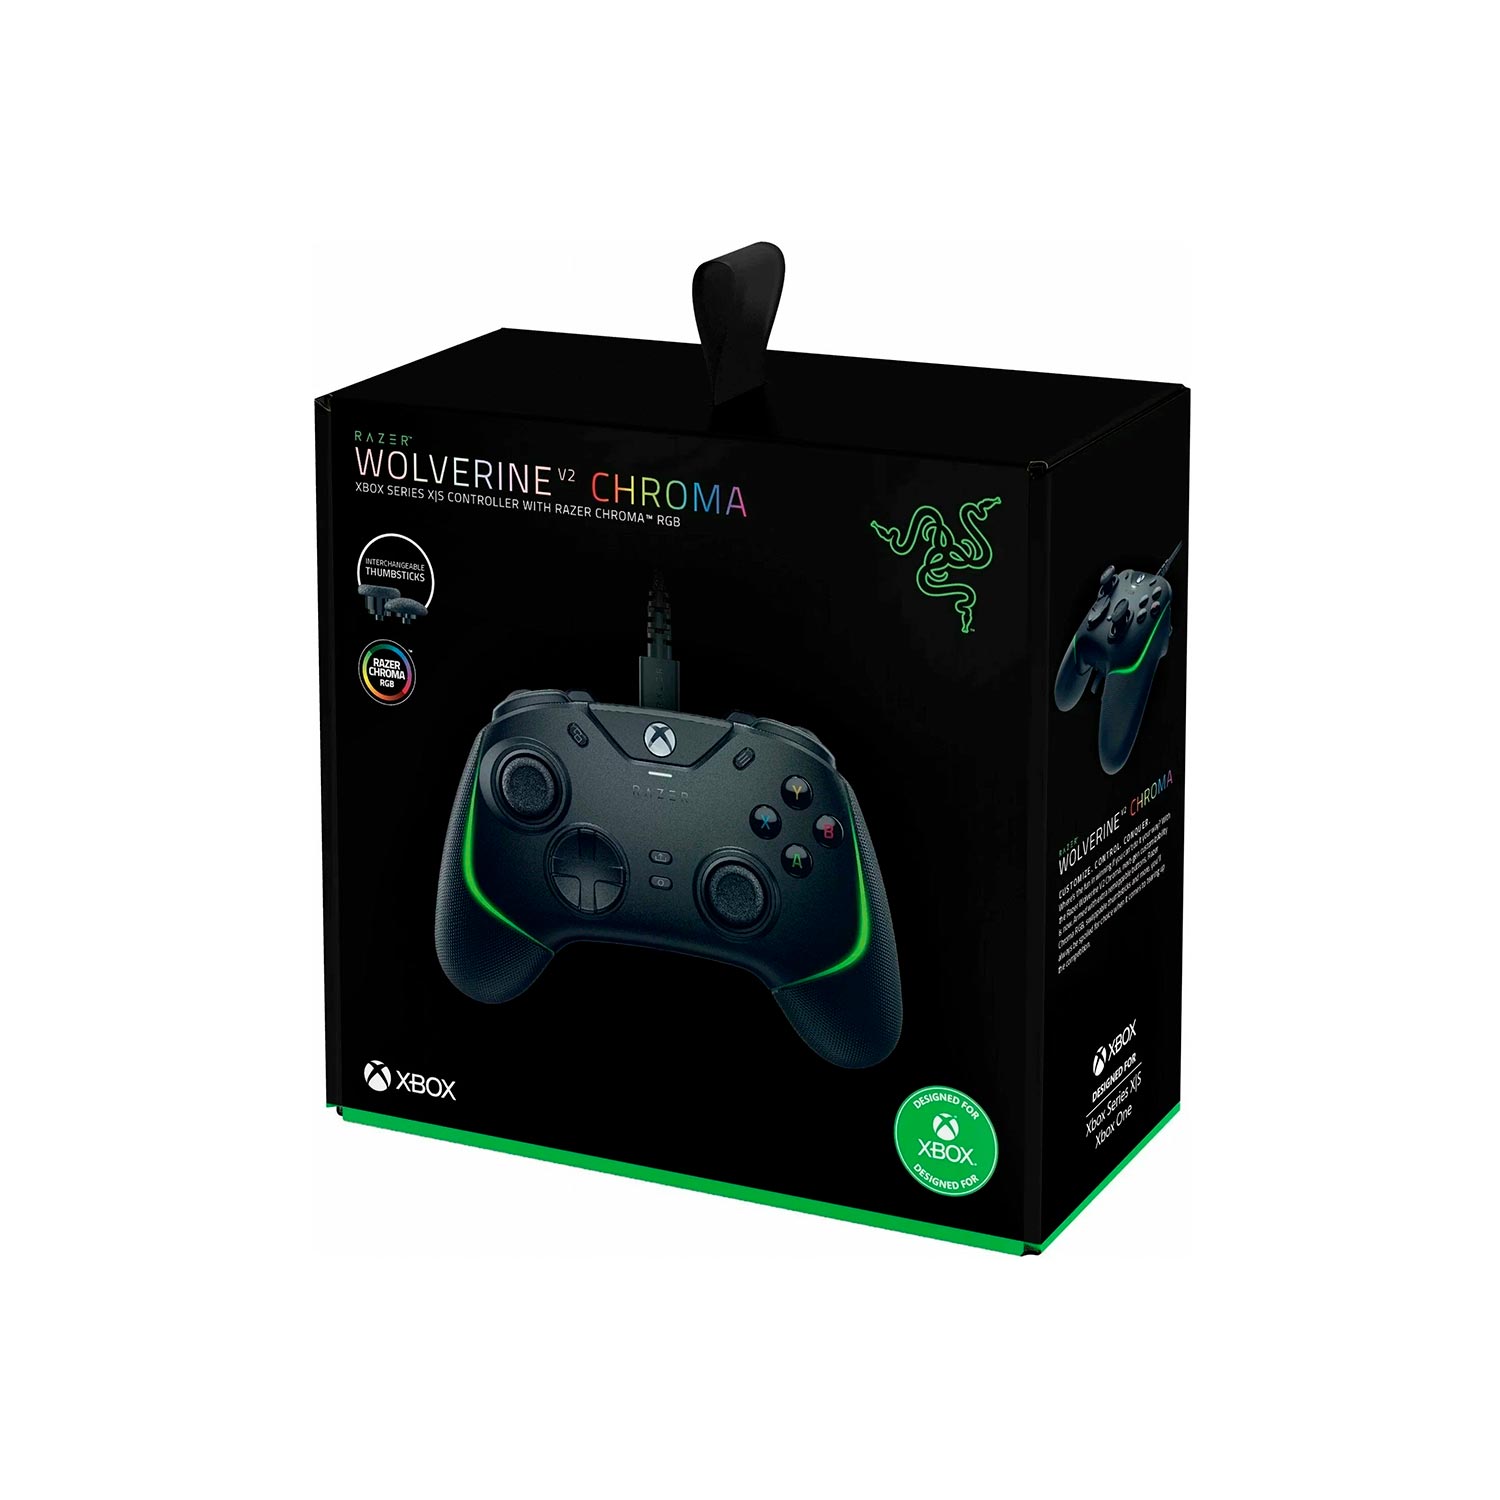 Mando Xbox Series X Wieless Negro + Bateria Recable - Coolbox